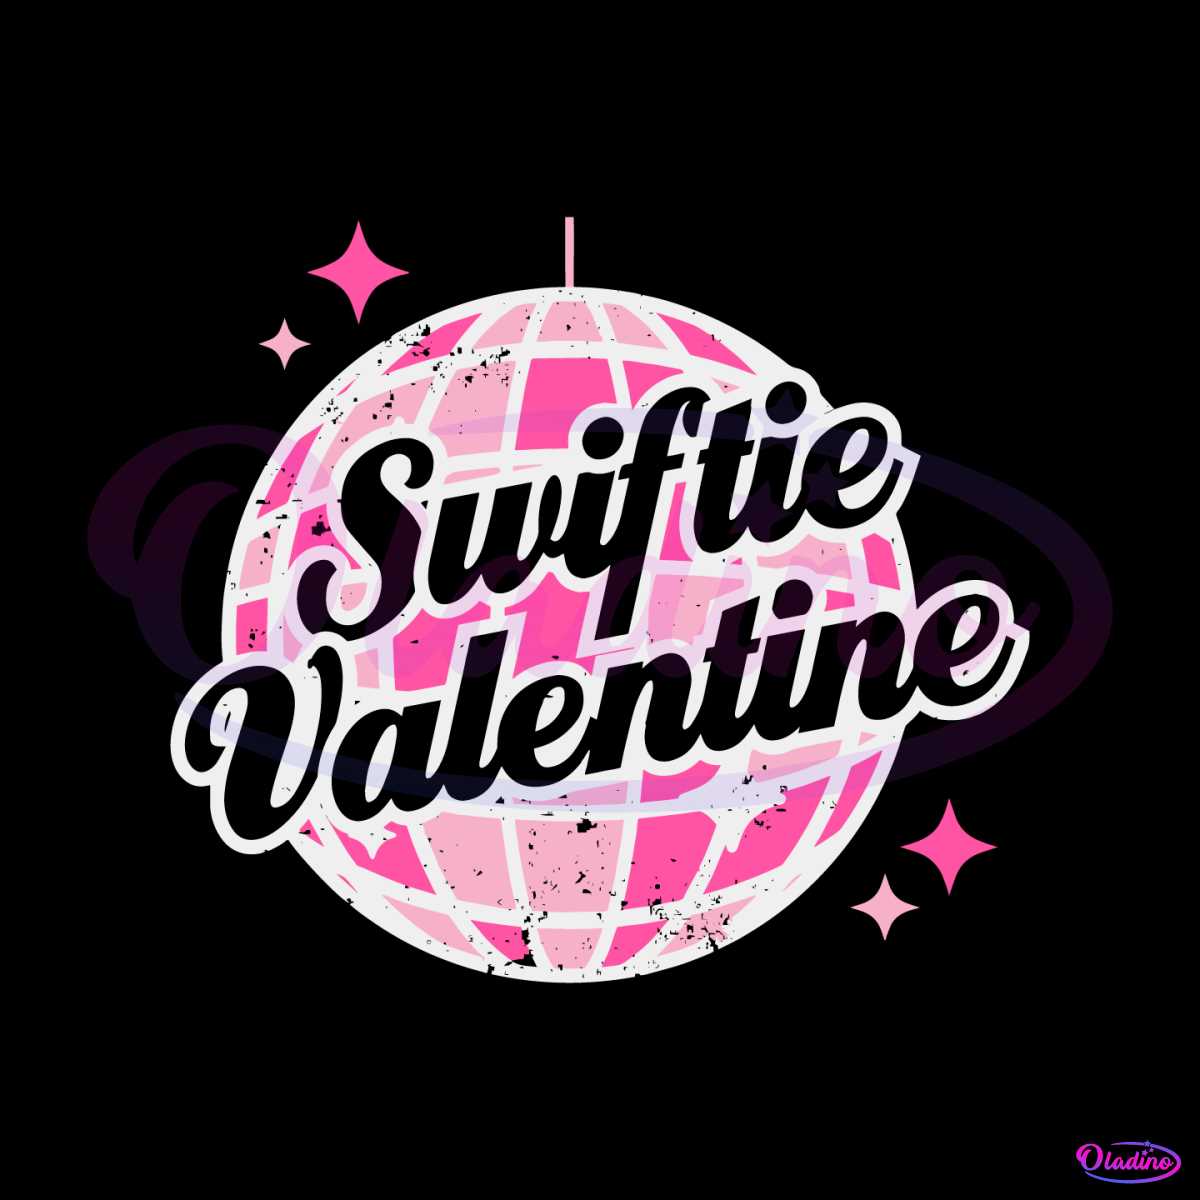 groovy-swiftie-valentine-disco-ball-svg